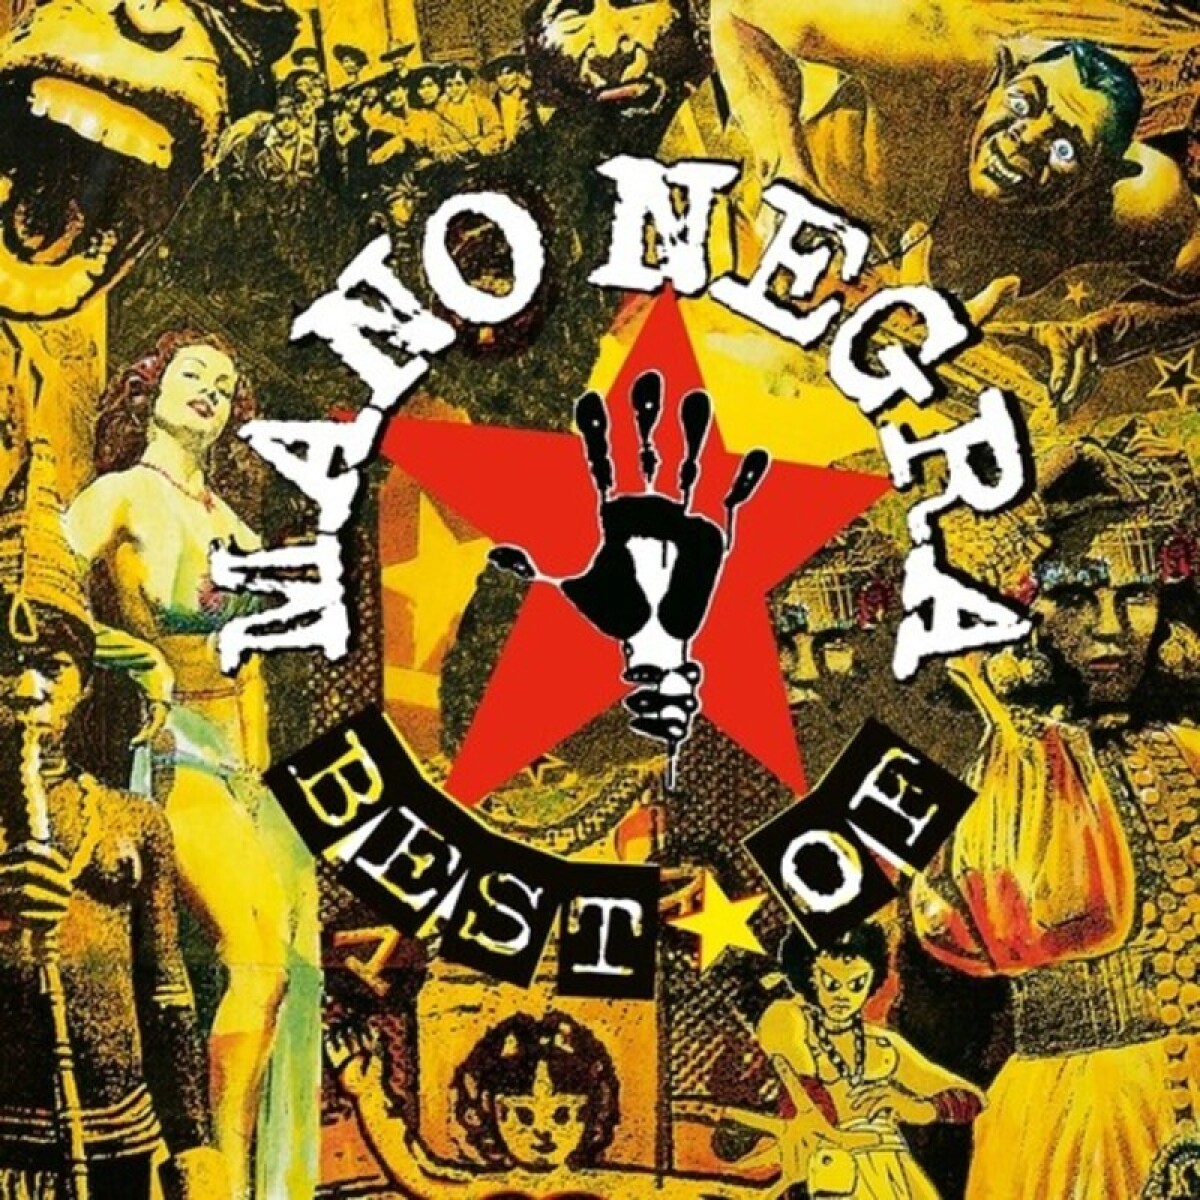 Mano Negra - Best Of Mano Negra - Vinilo 